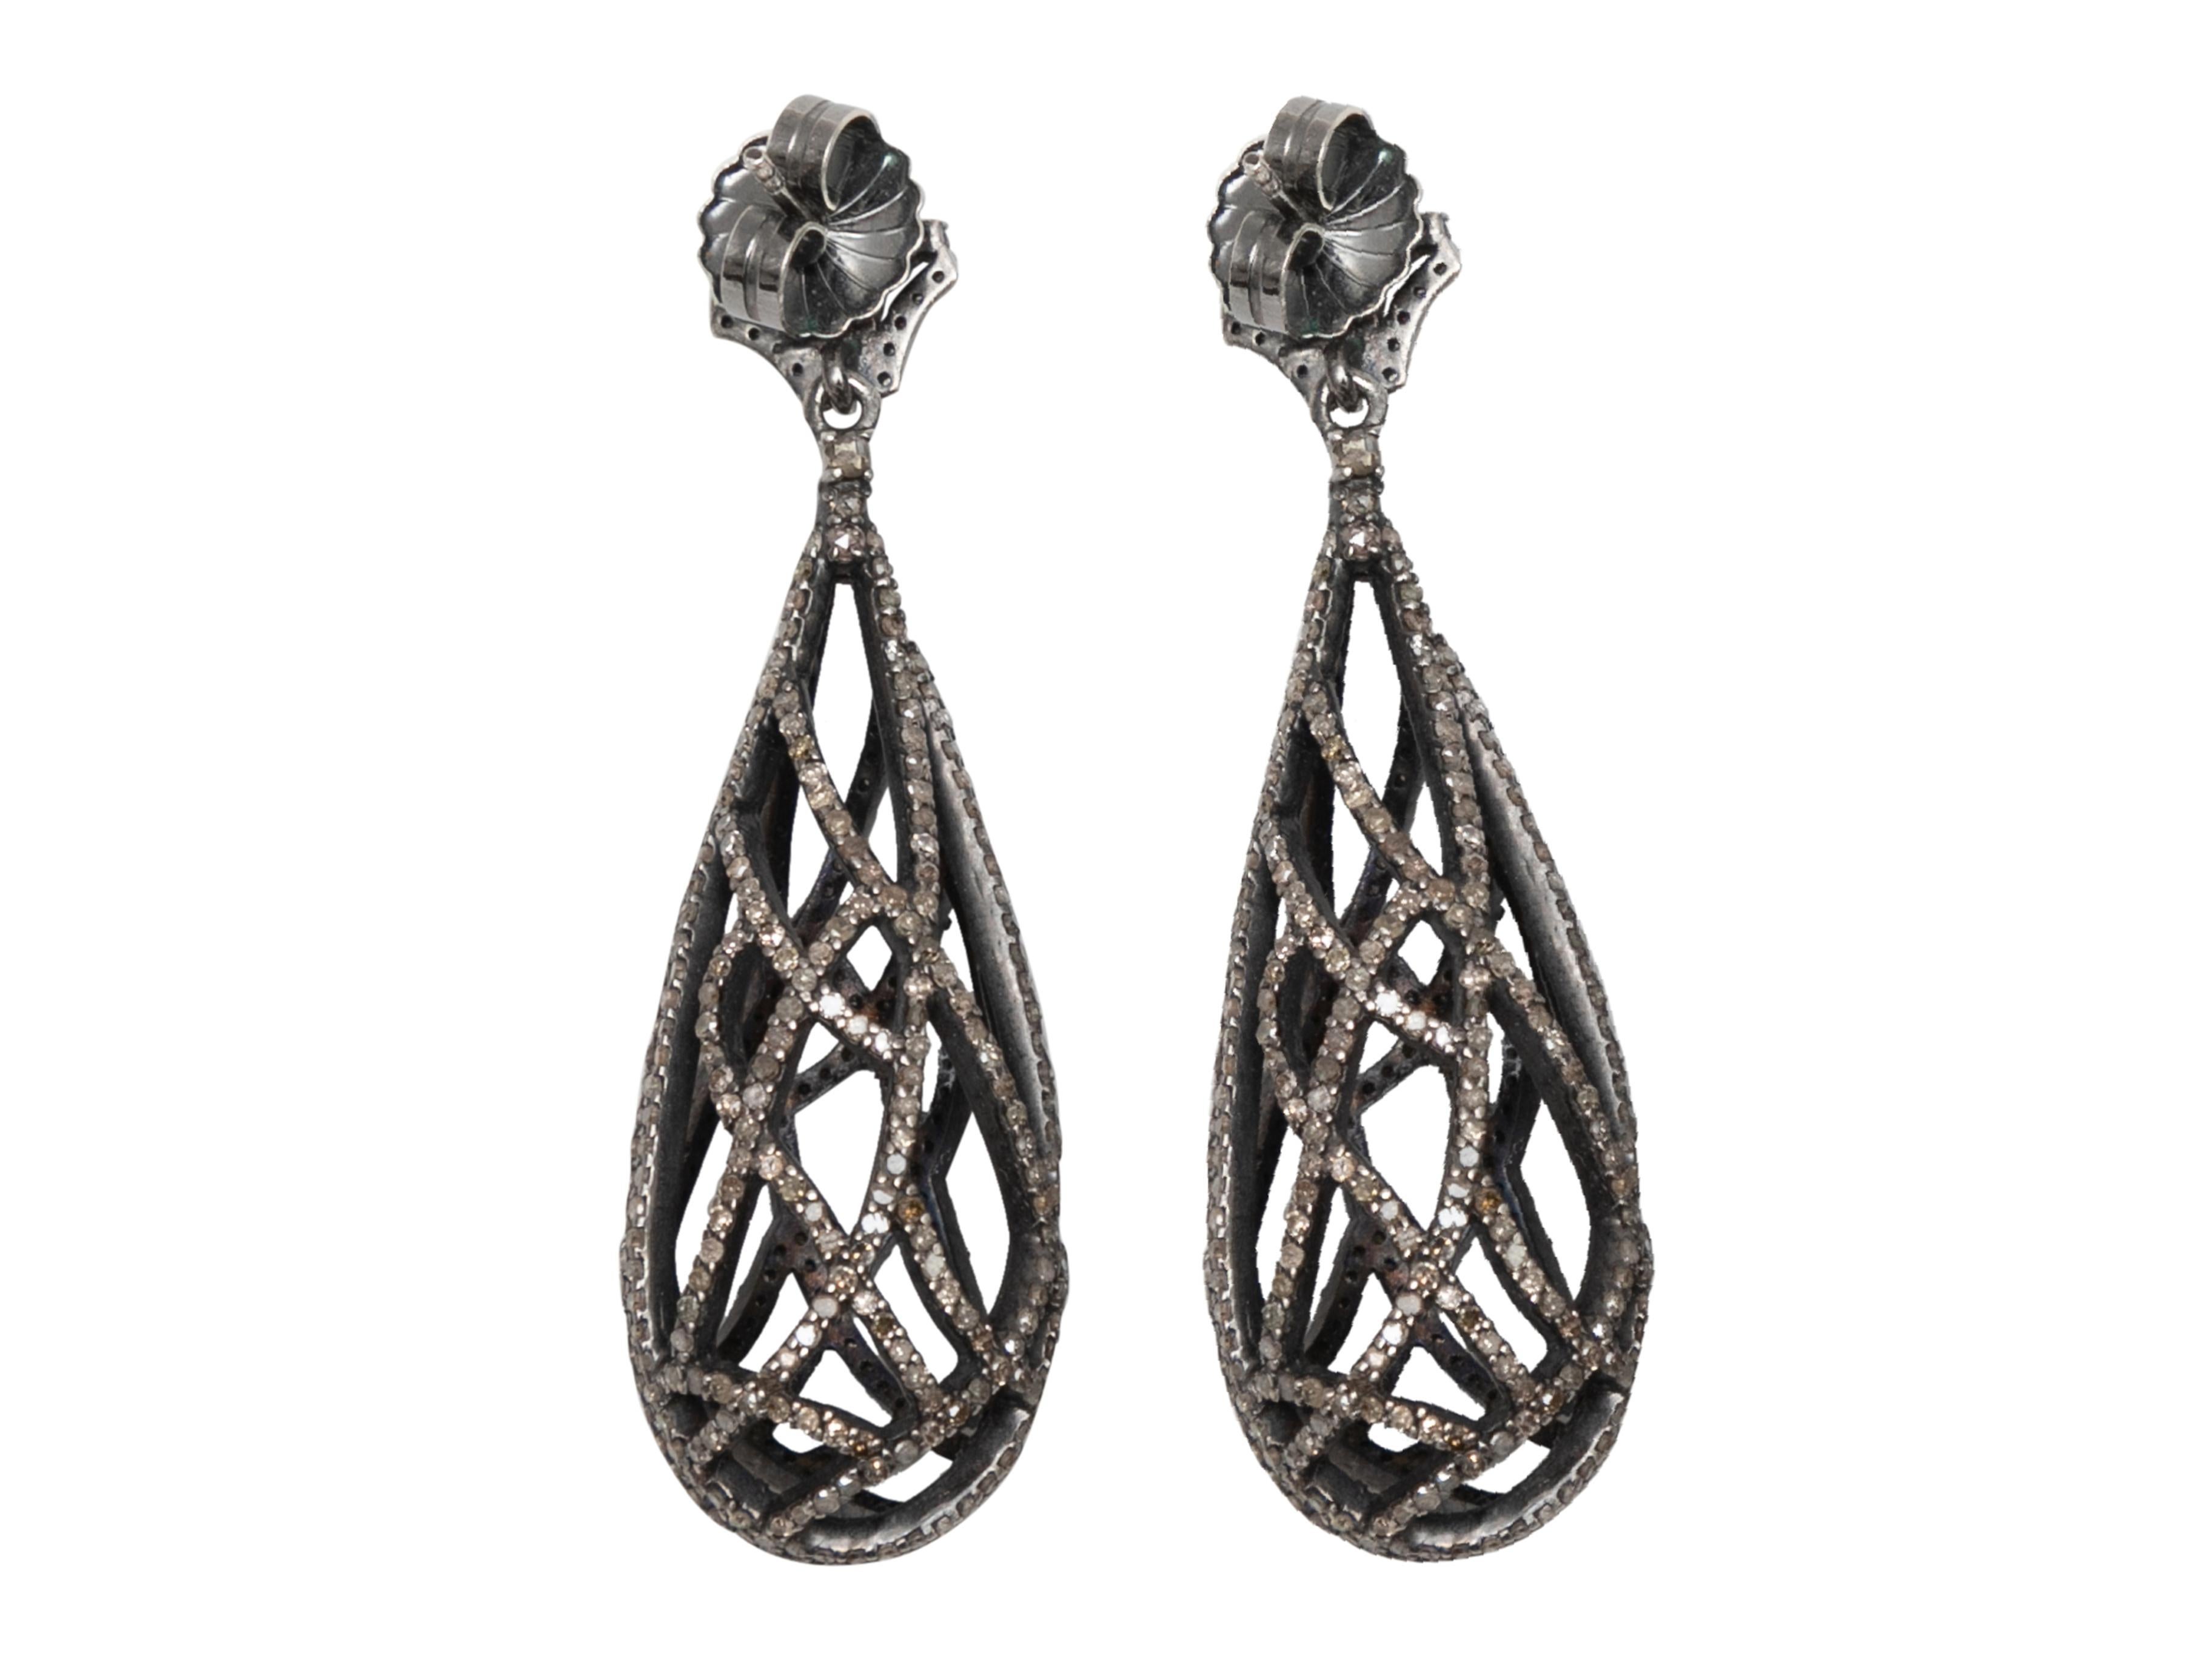 Silver-tone and pave diamond pierced teardrop earrings by Bavna. 0.75